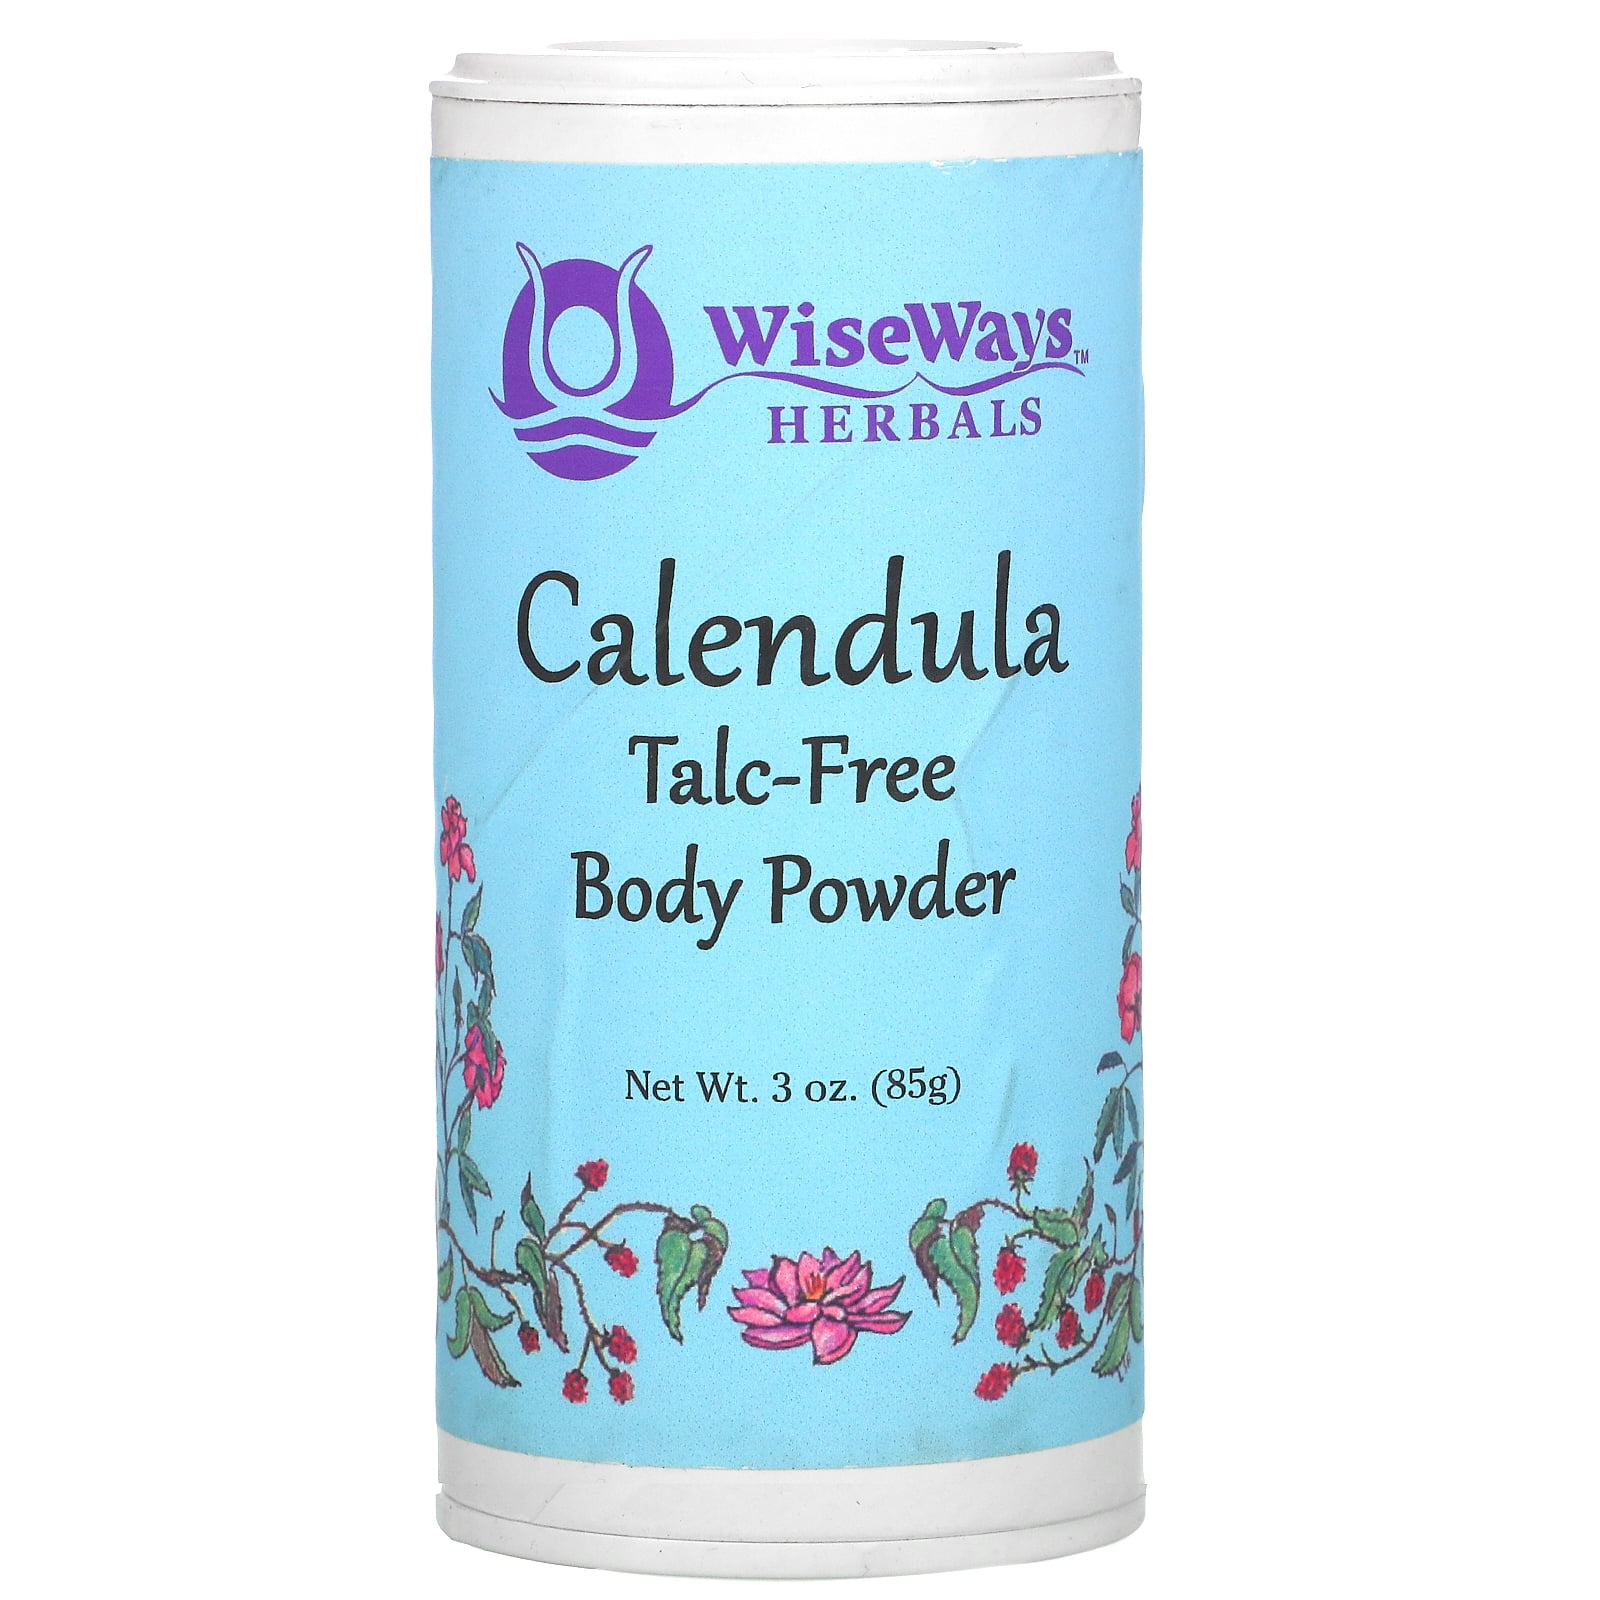 Calendula Body Powder 4 oz: WiseWays Herbals